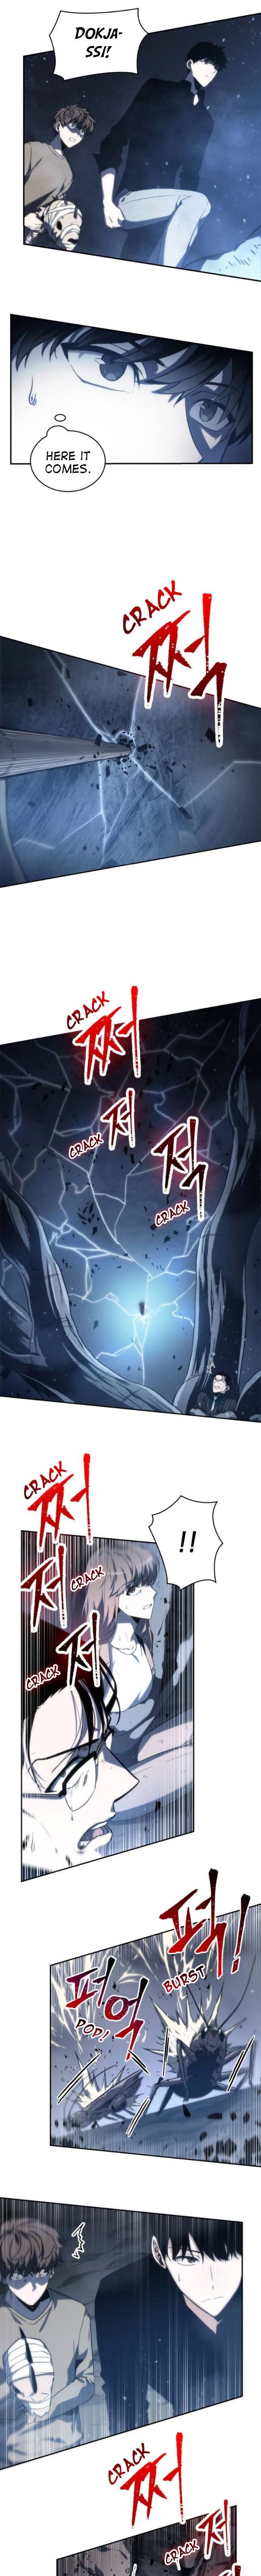 Omniscient Reader's View Manga Manga Chapter - 20 - image 17